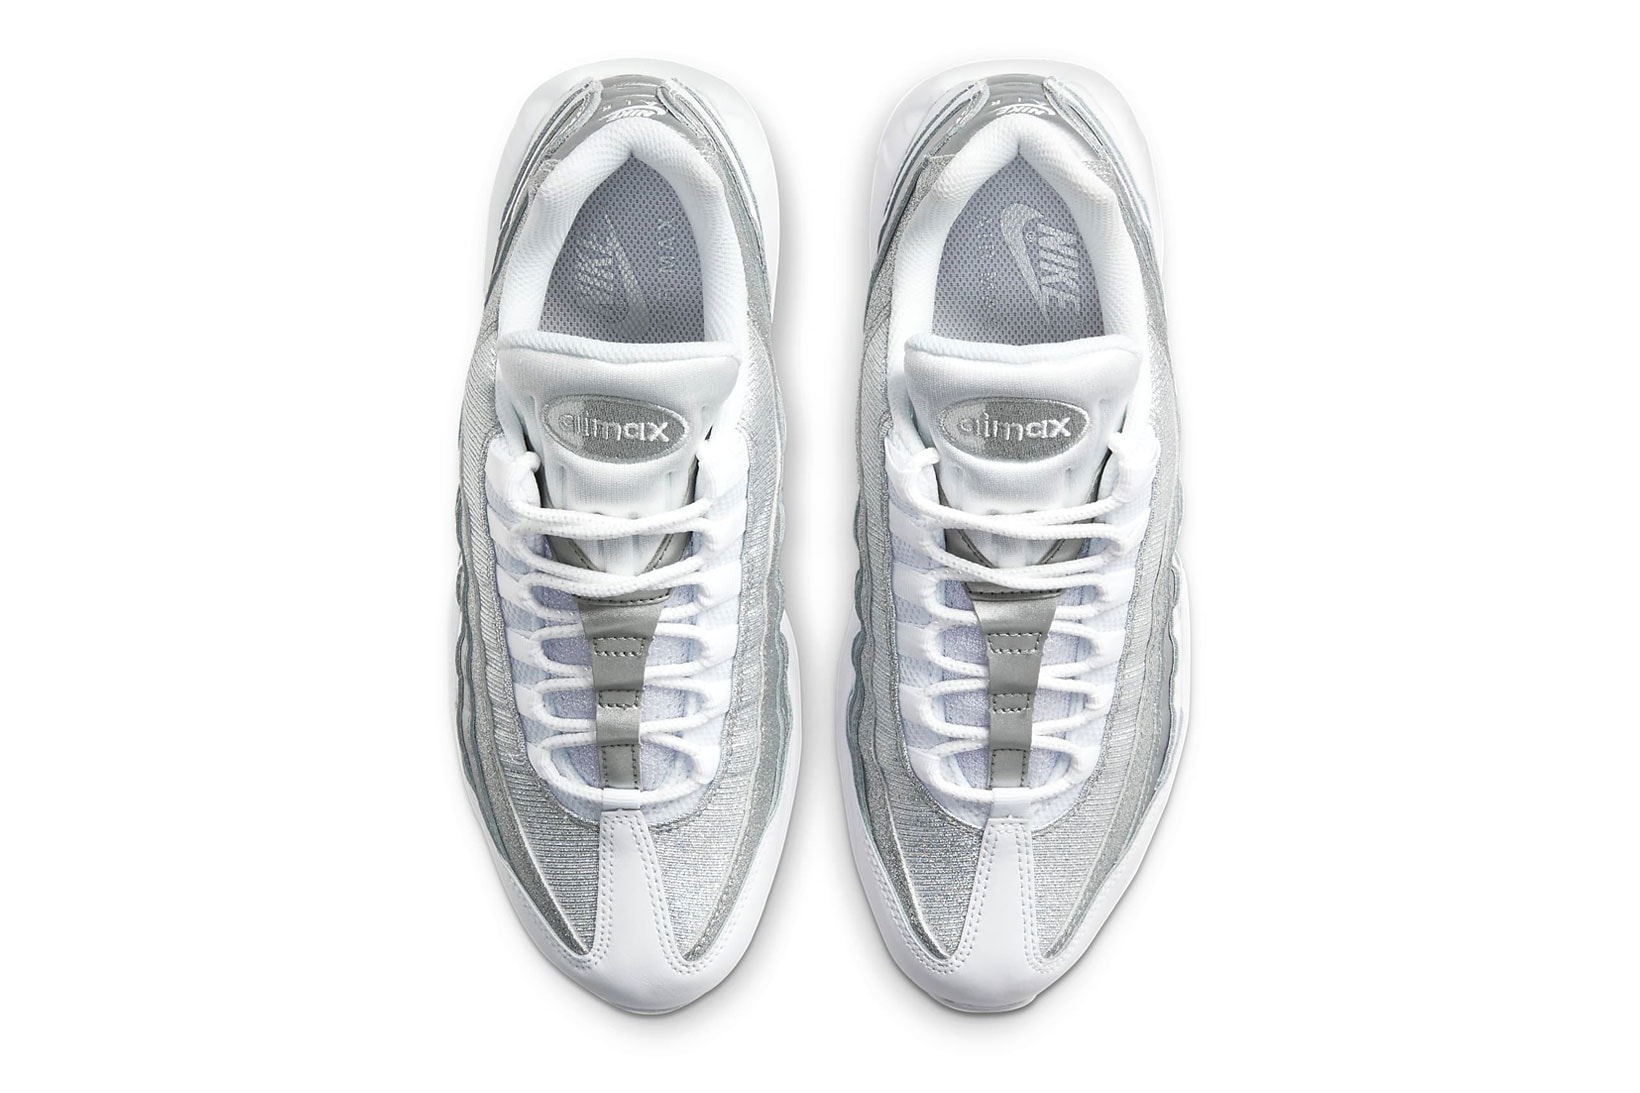 nike air max 95 am95 silver metallic glitter swoosh logo sneakers top upper laces tongue